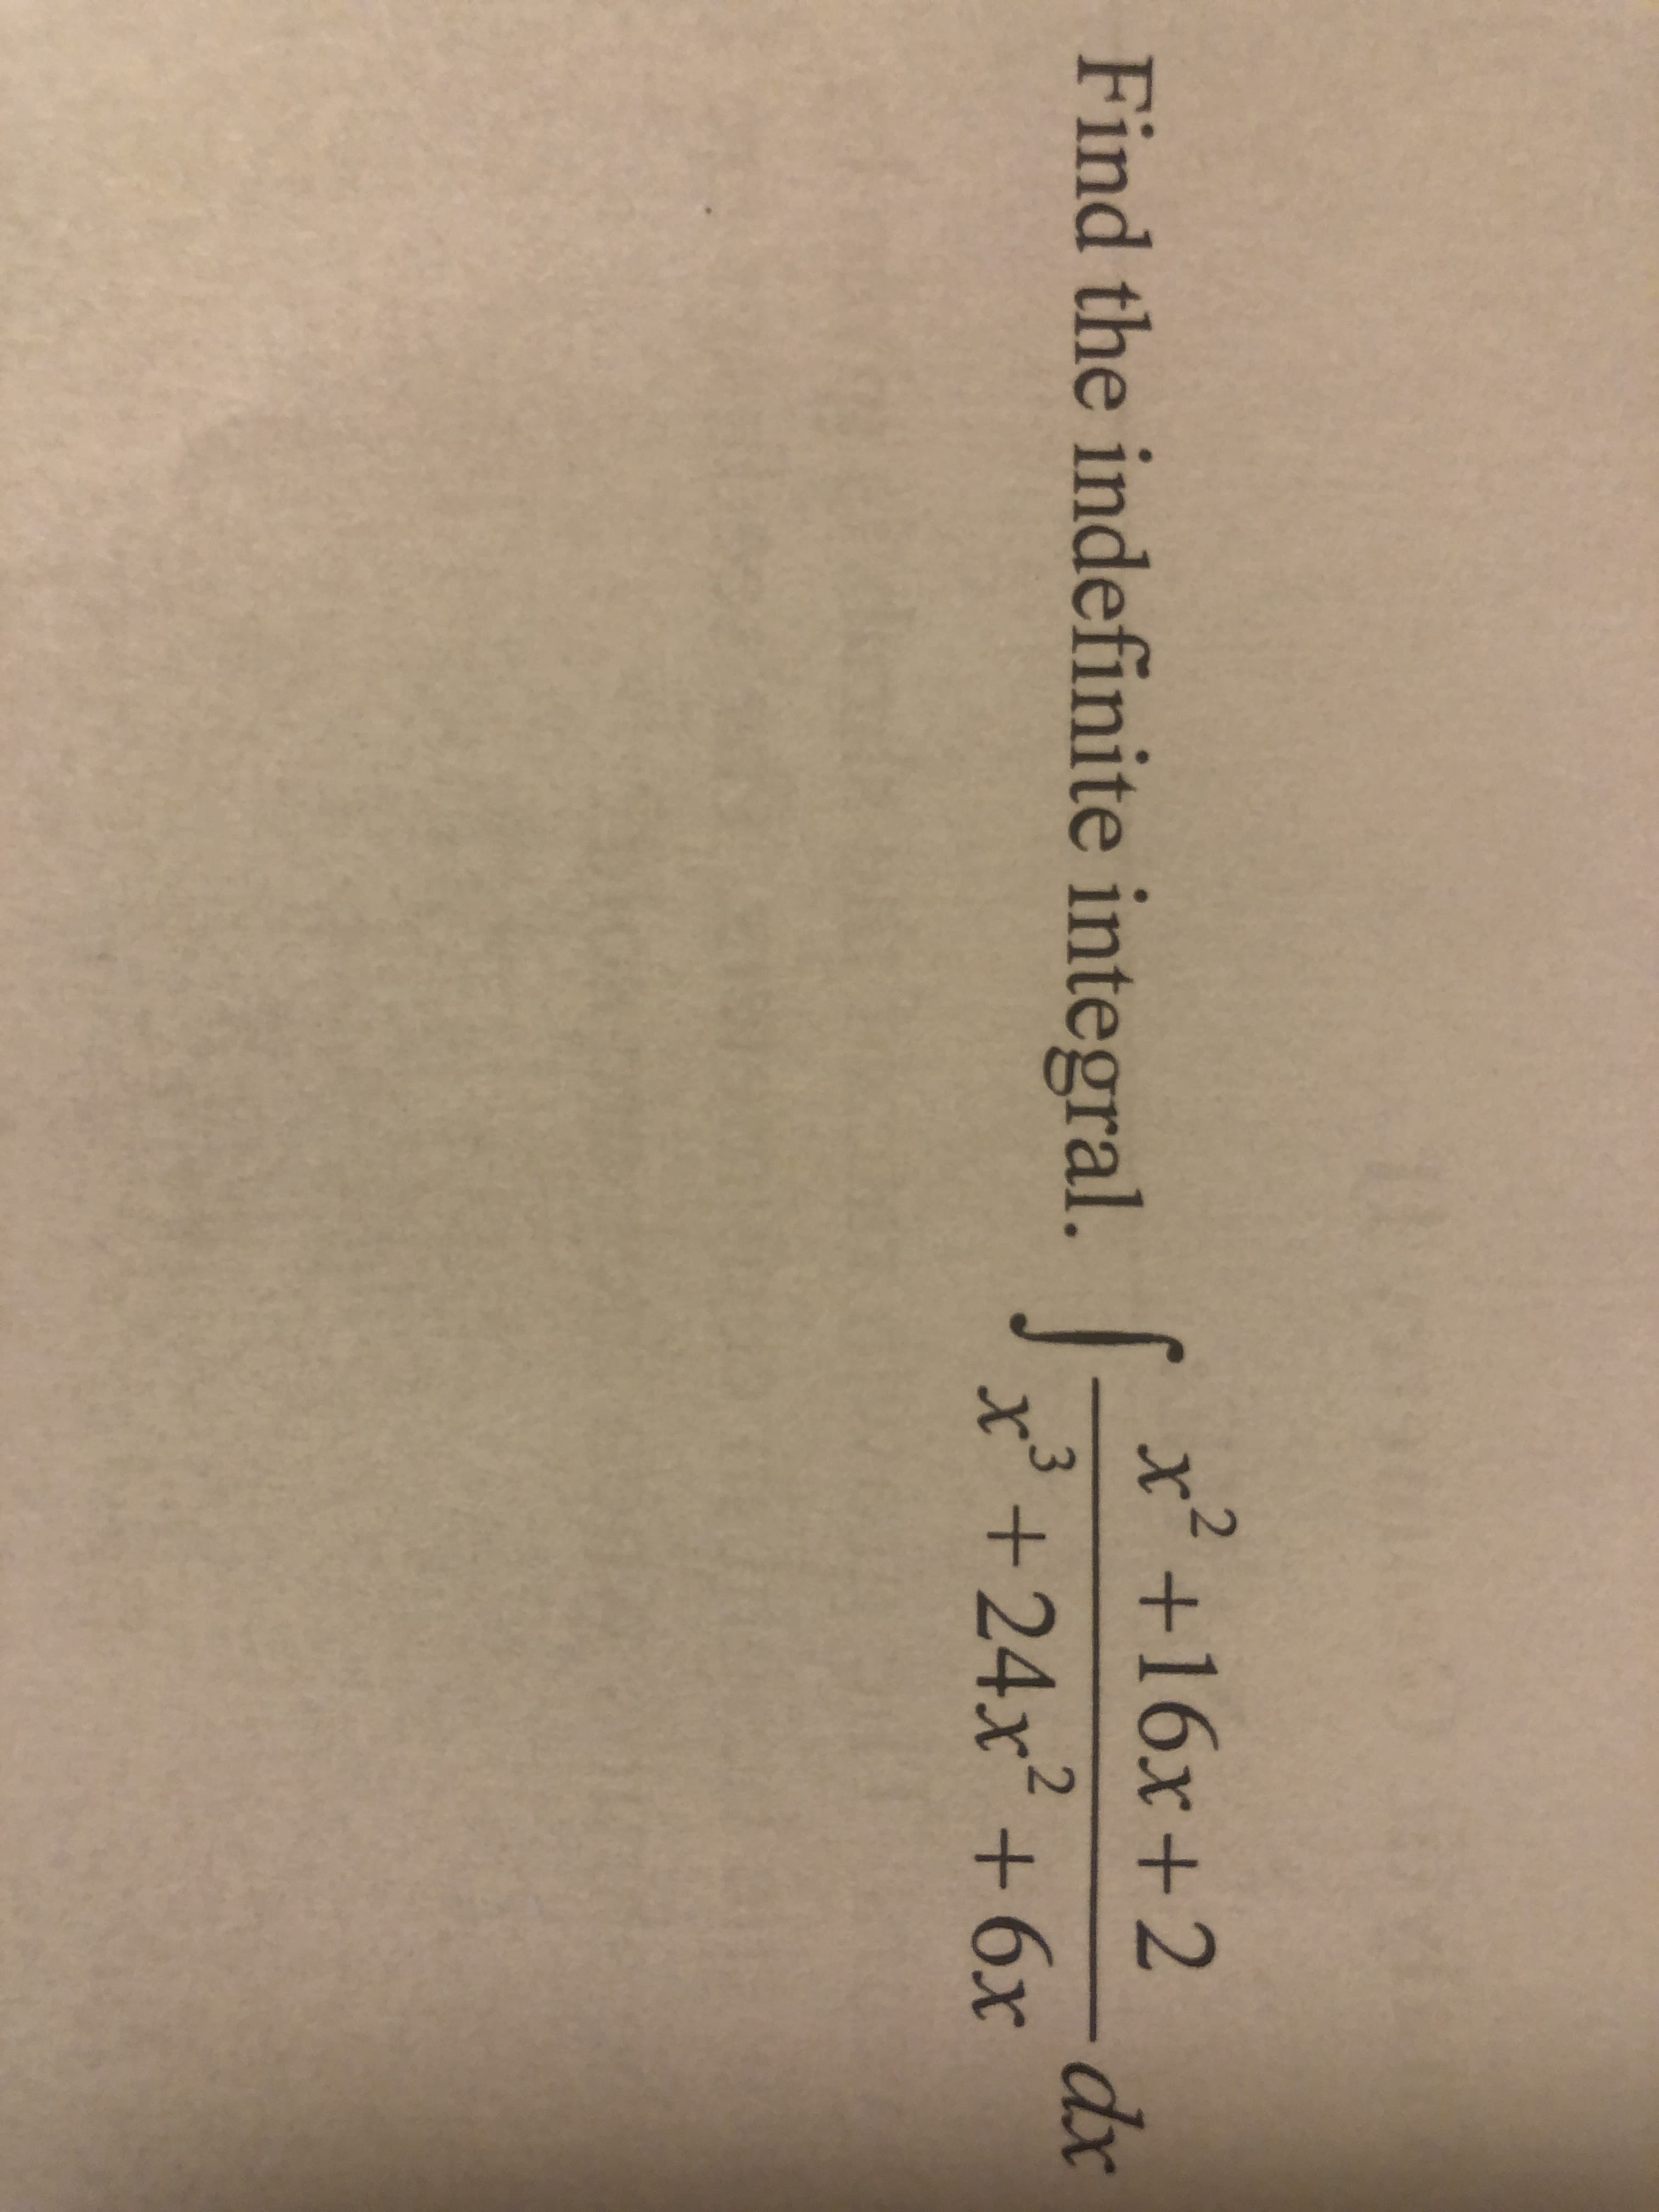 Find the indefinite integral.
2
x+16x+2
x'+24x² +6x
dx
2.
